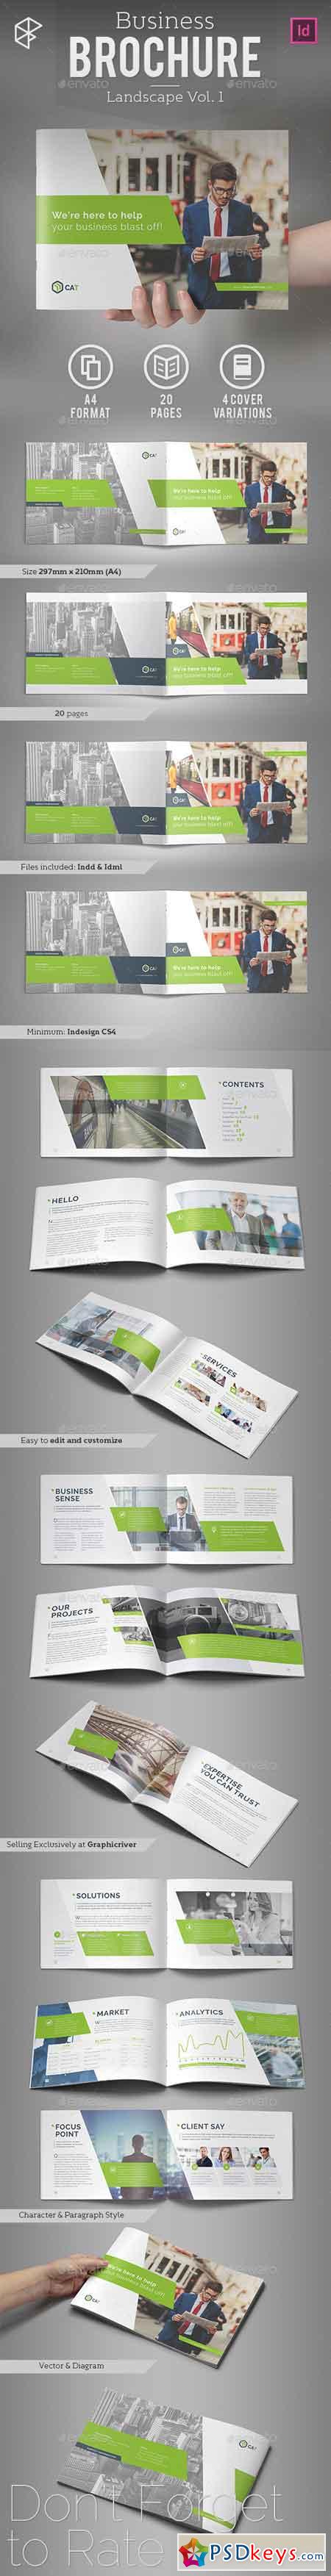 Business Brochure - Landscape Vol. 1 14376917